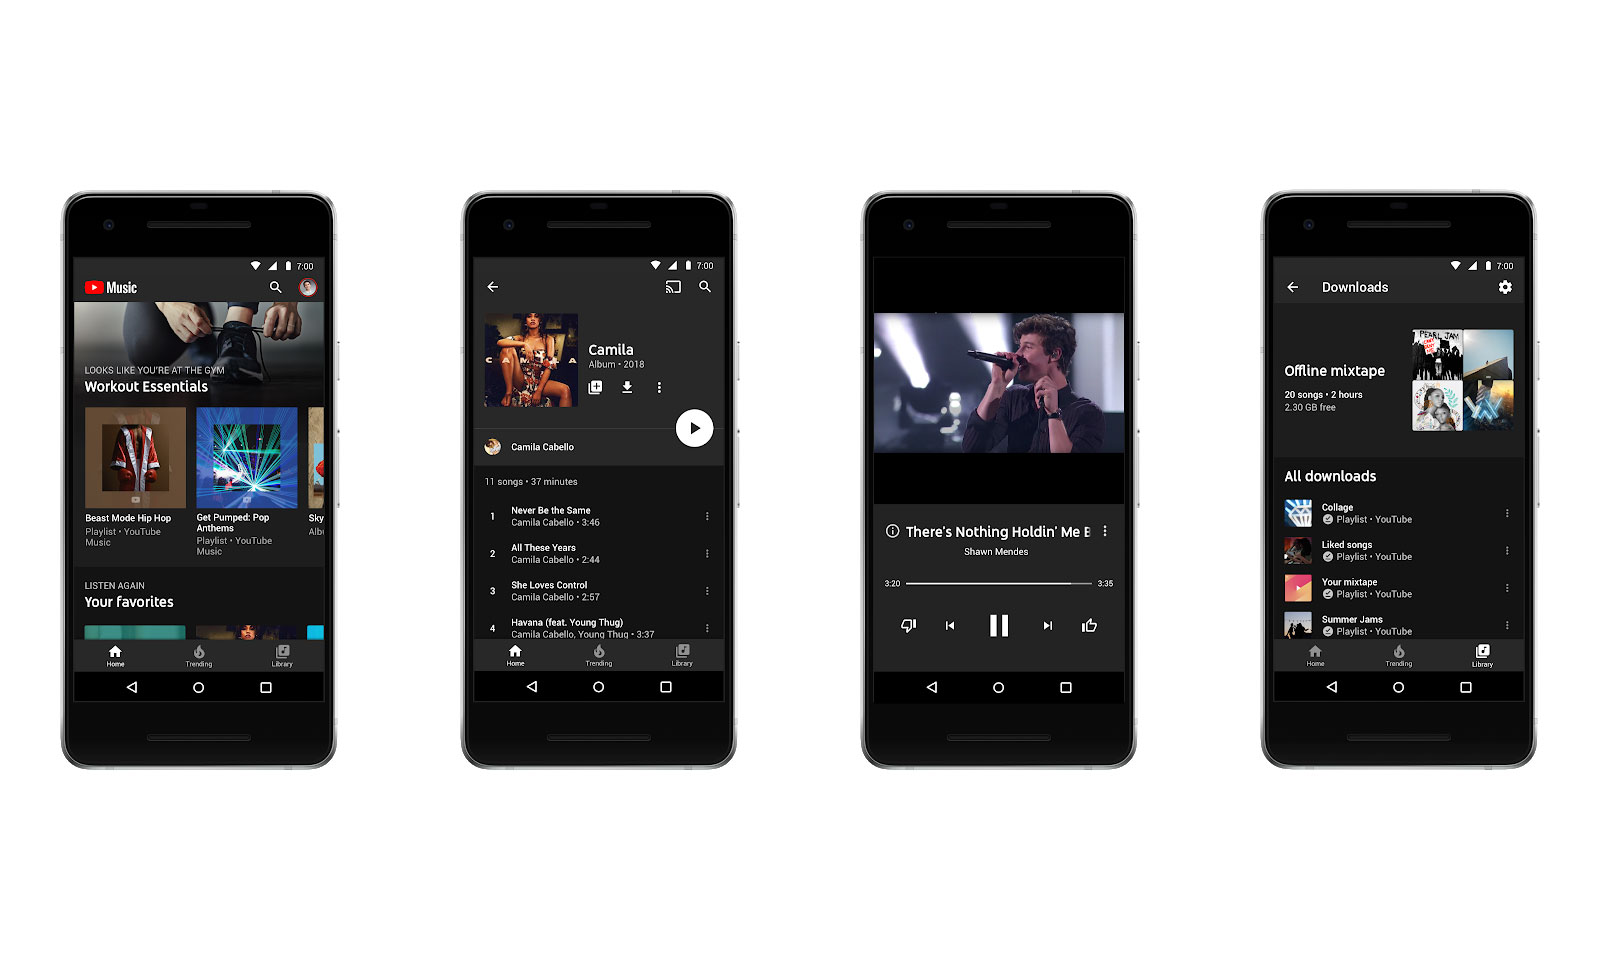 YouTube 将推出音乐流媒体 “YouTube Music” 服务平台